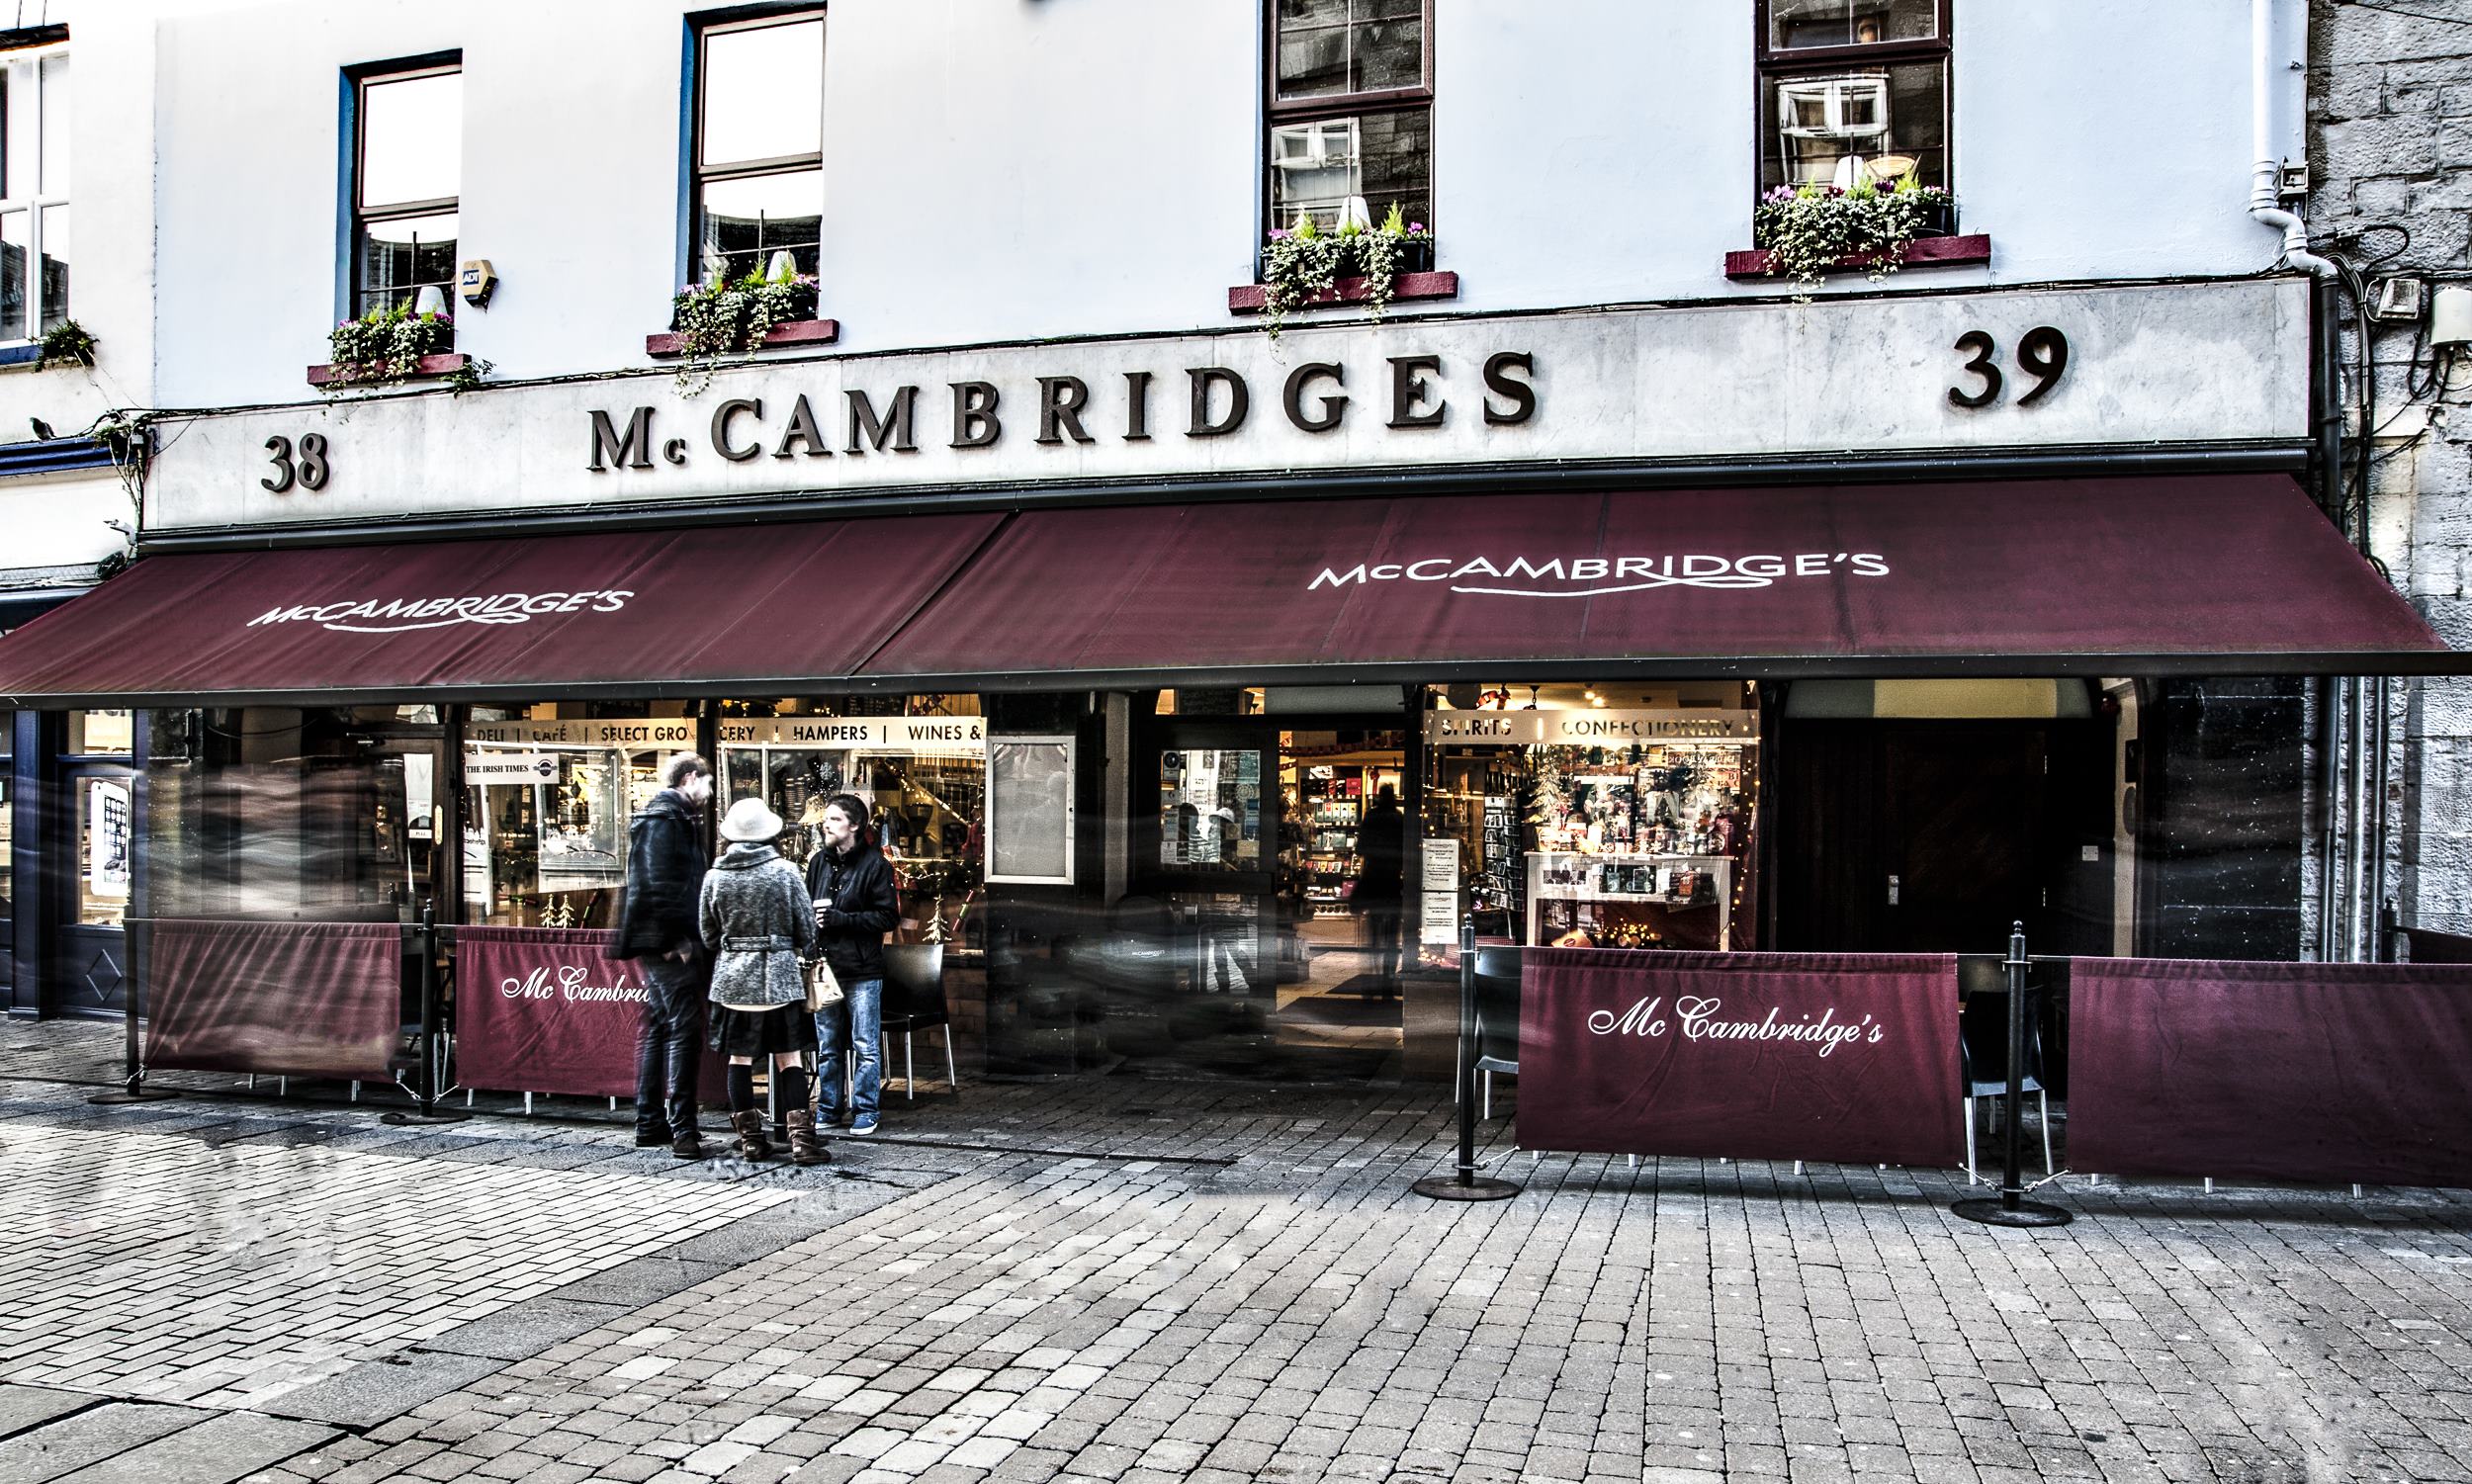 McCambridge's of Galway photo.jpg